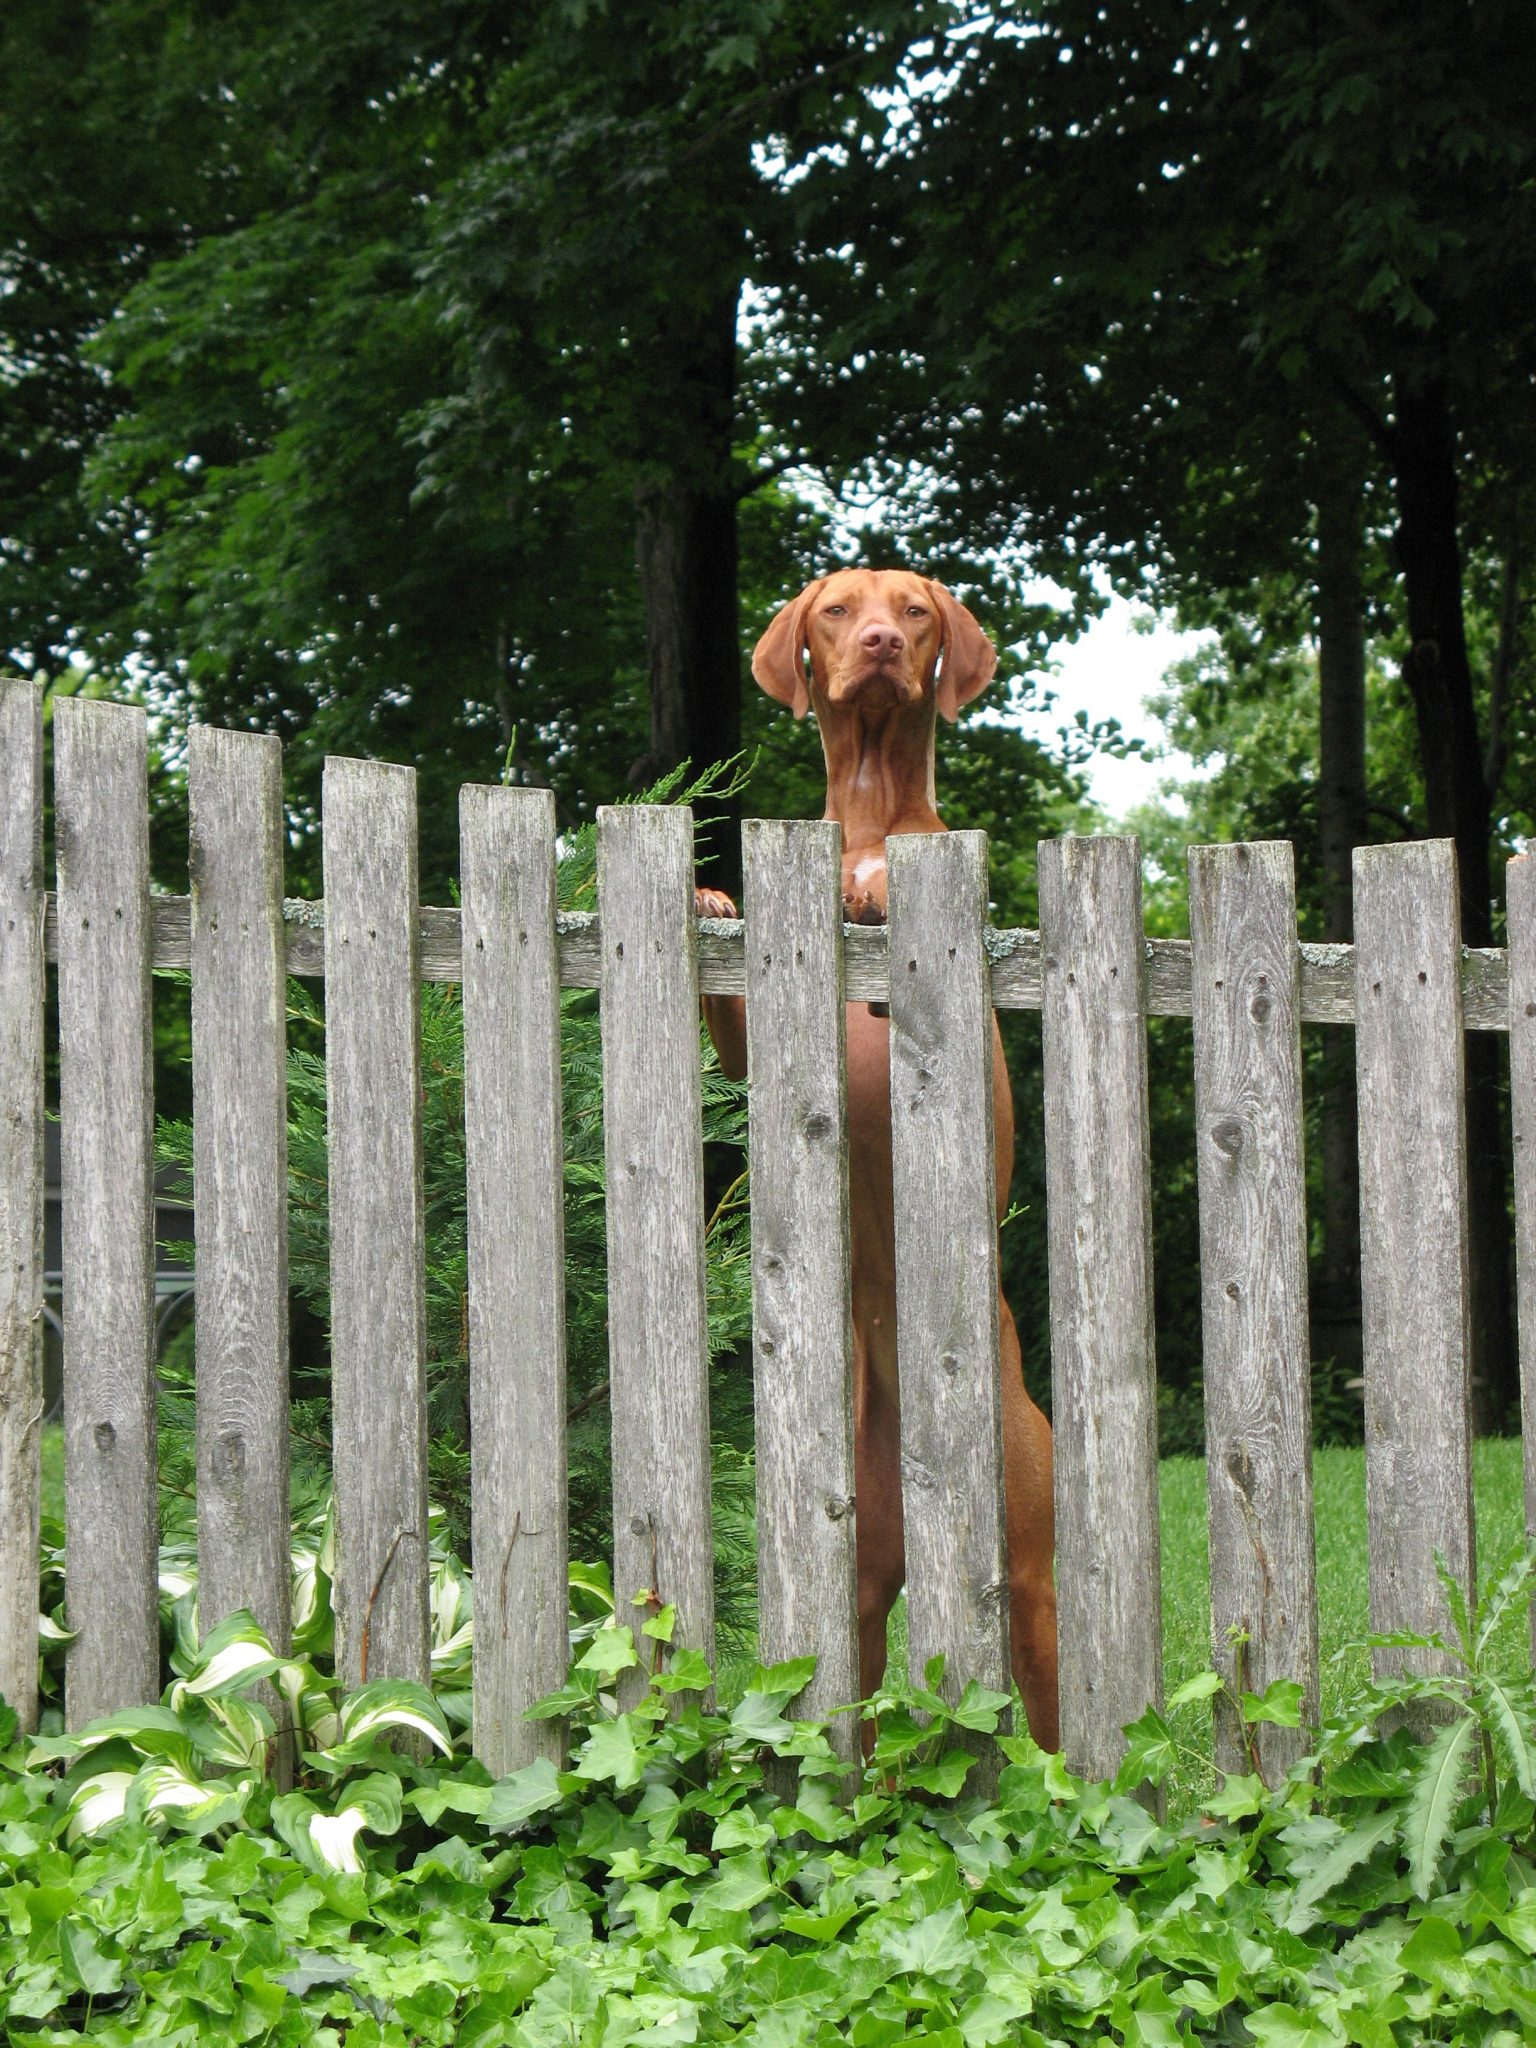 Large dog looks over fence